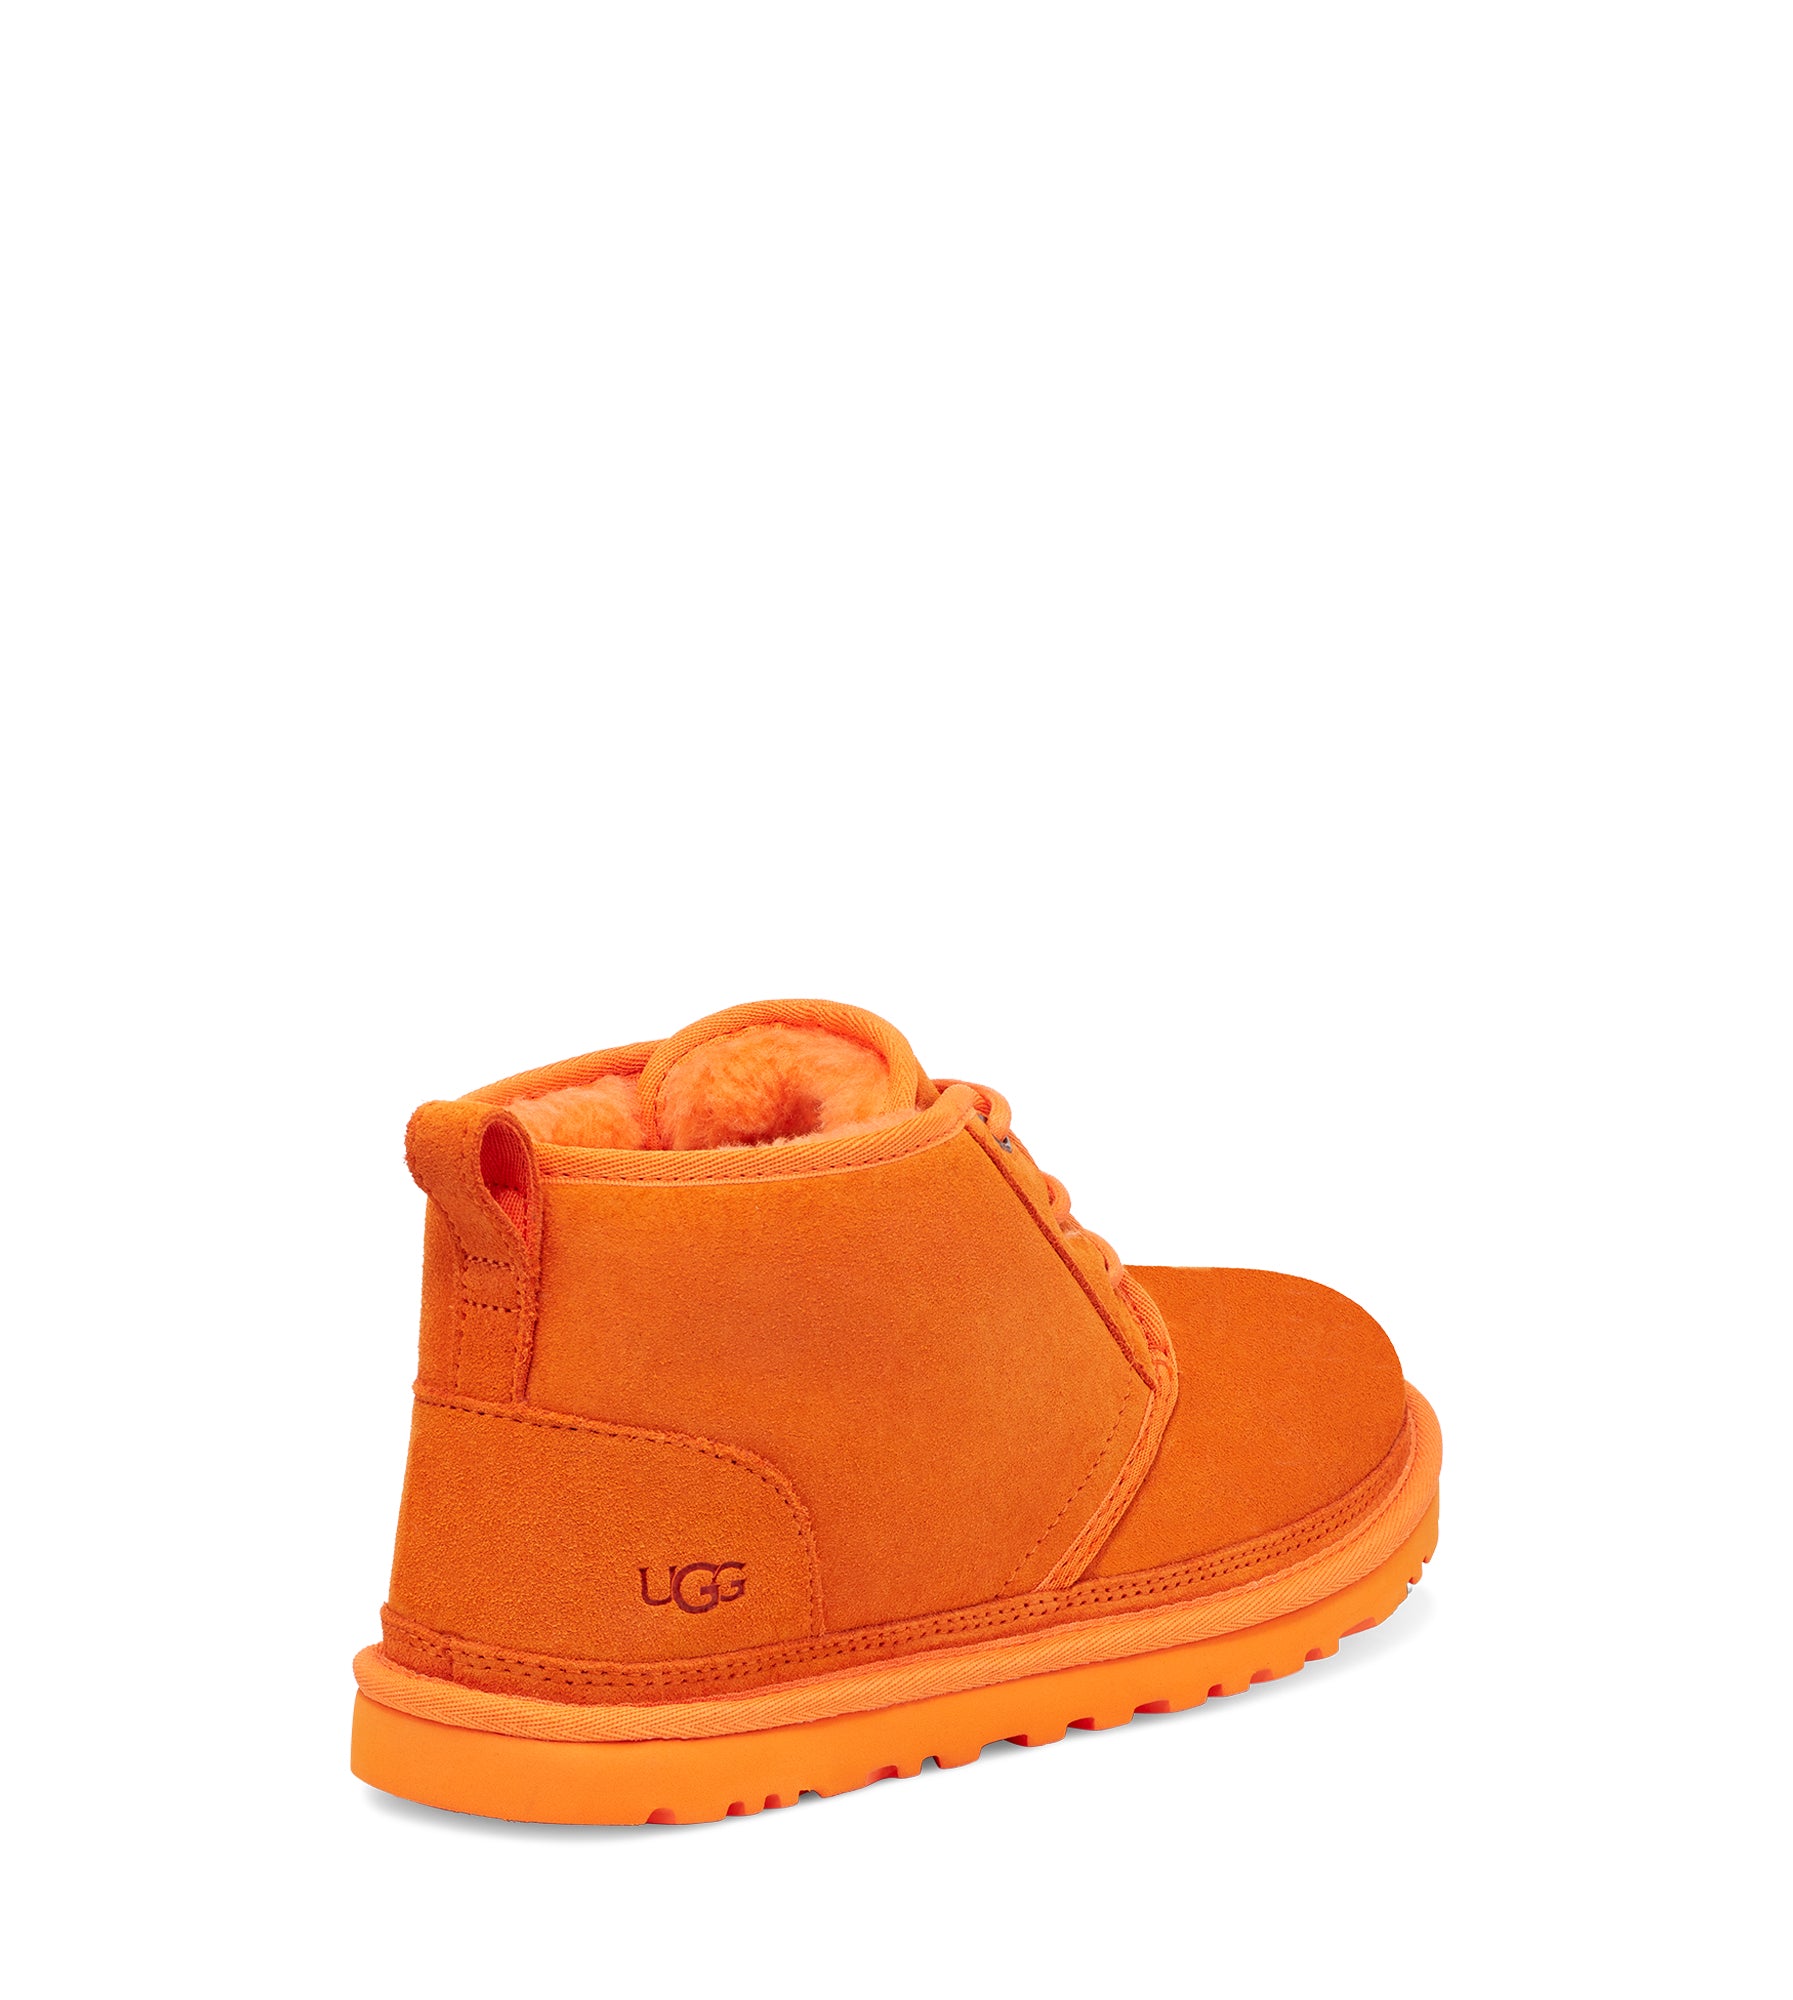 UGG Men’s Boots - Neumel - Clementine 